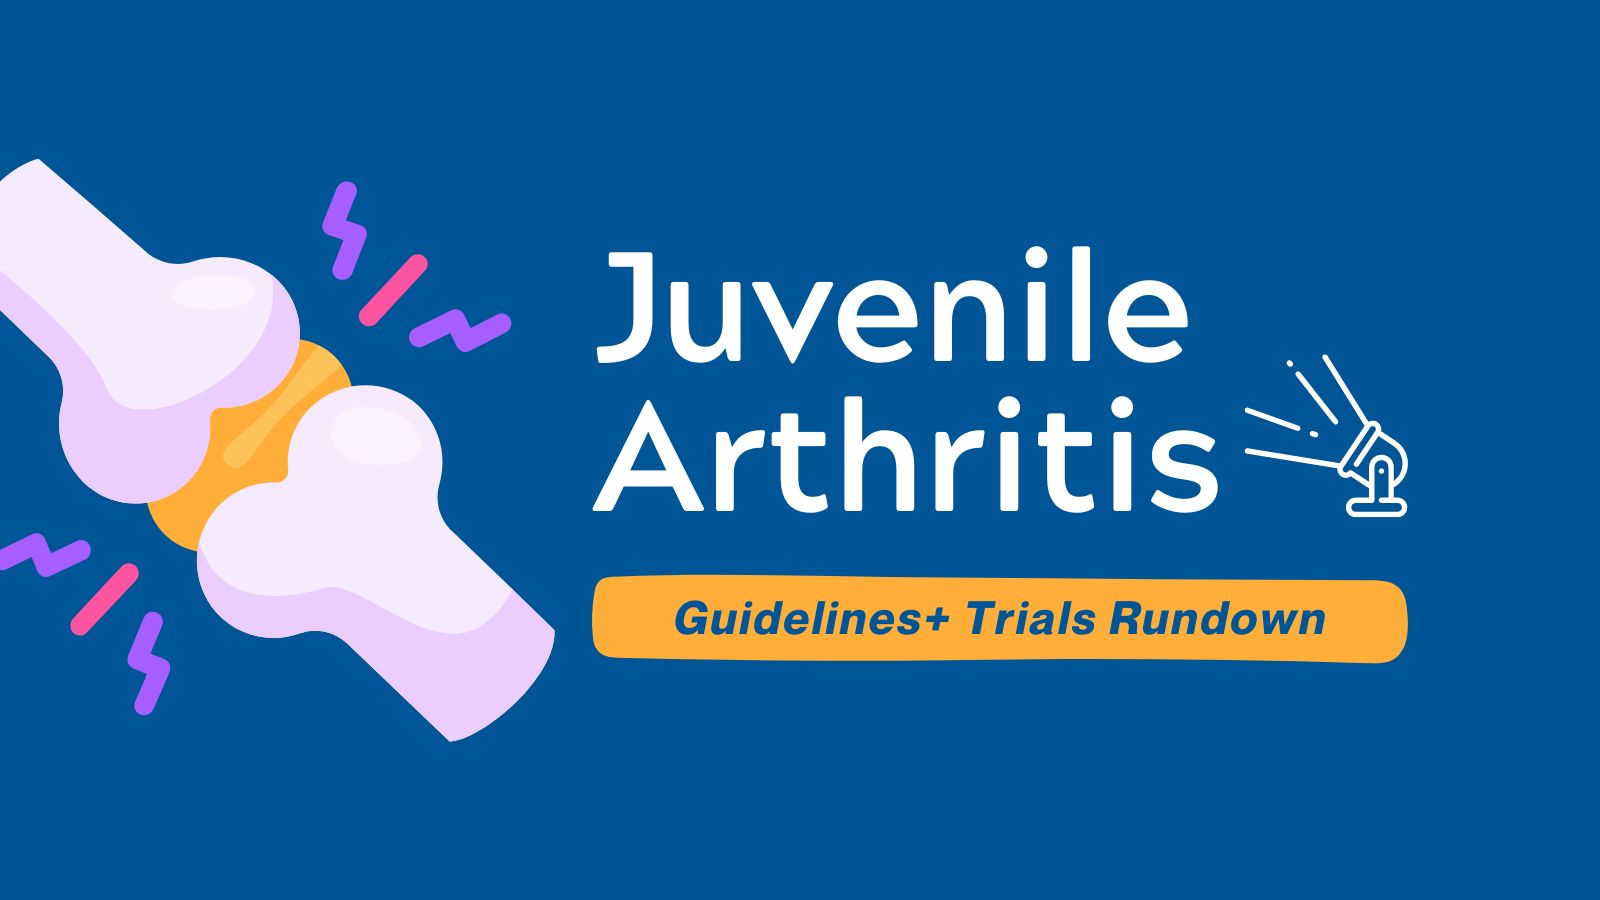 Guidelines + Trials Rundown - Juvenile Arthritis